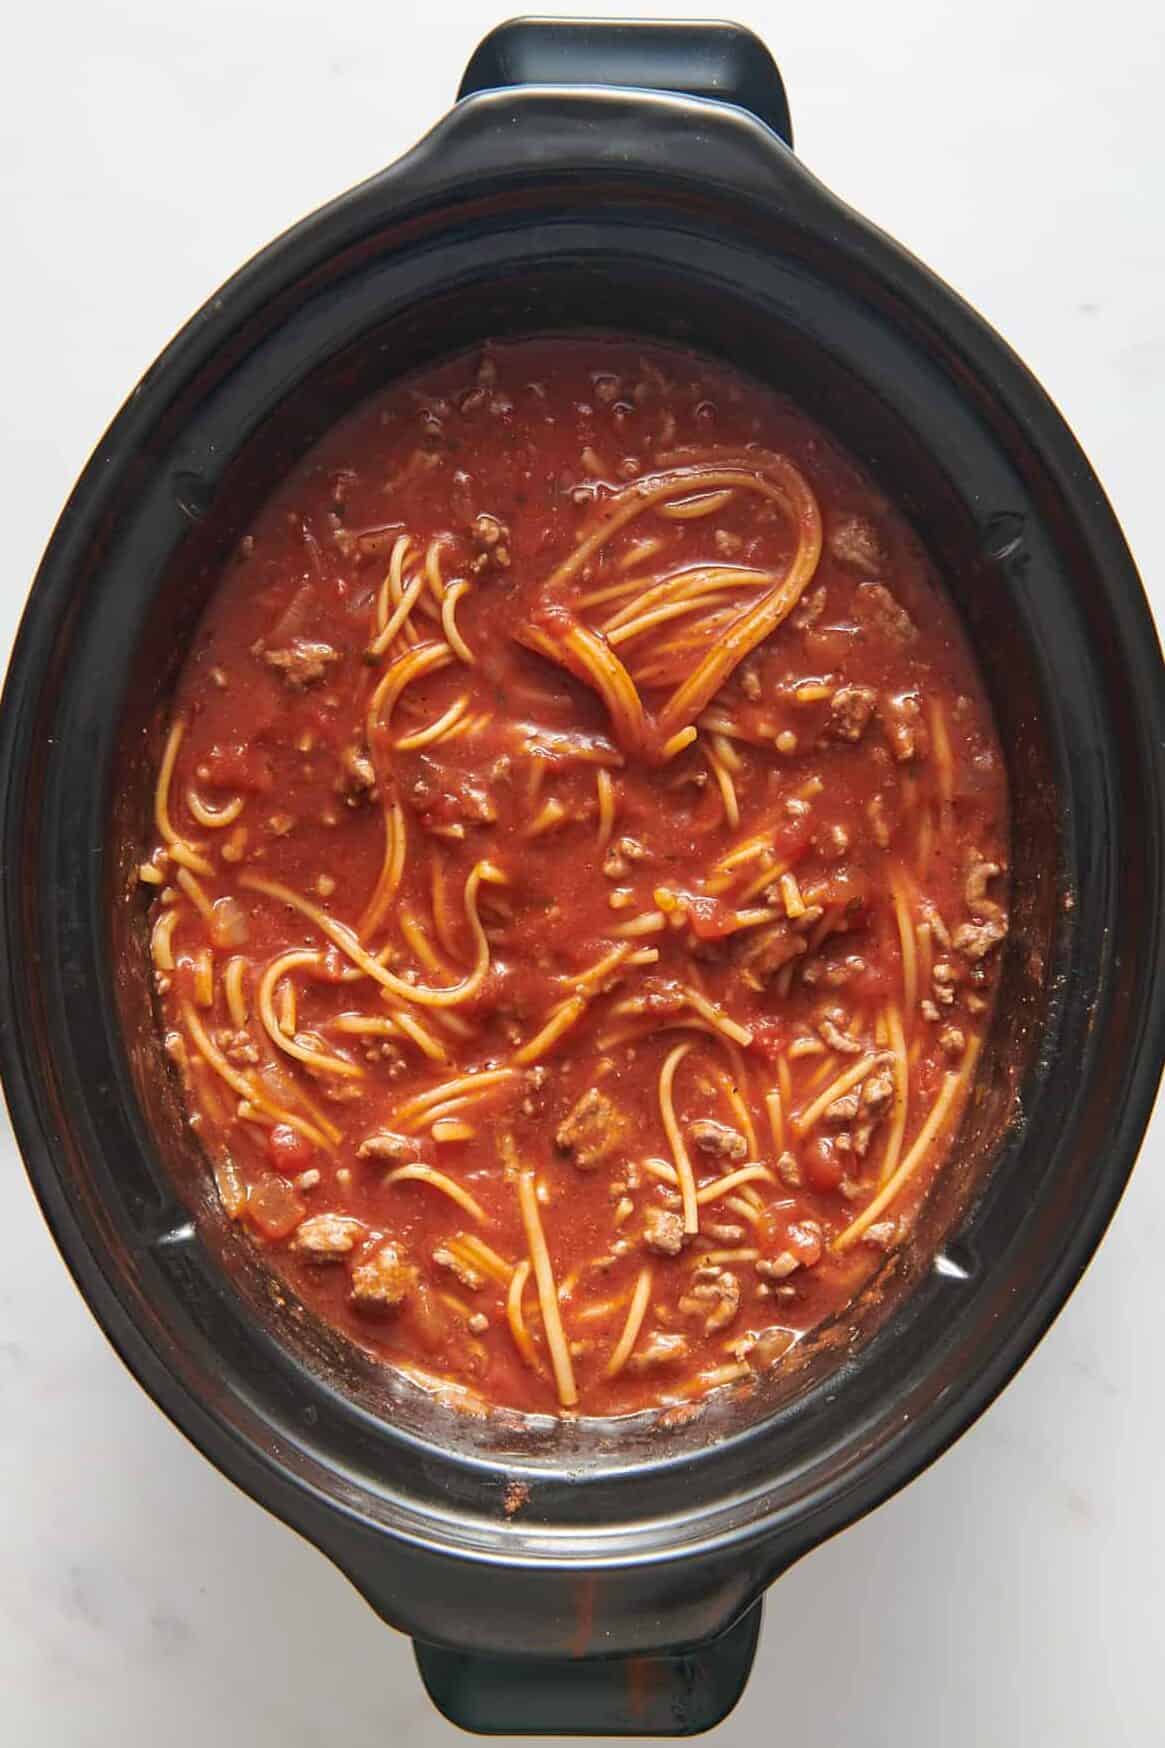 top down image of crock pot spaghetti. 